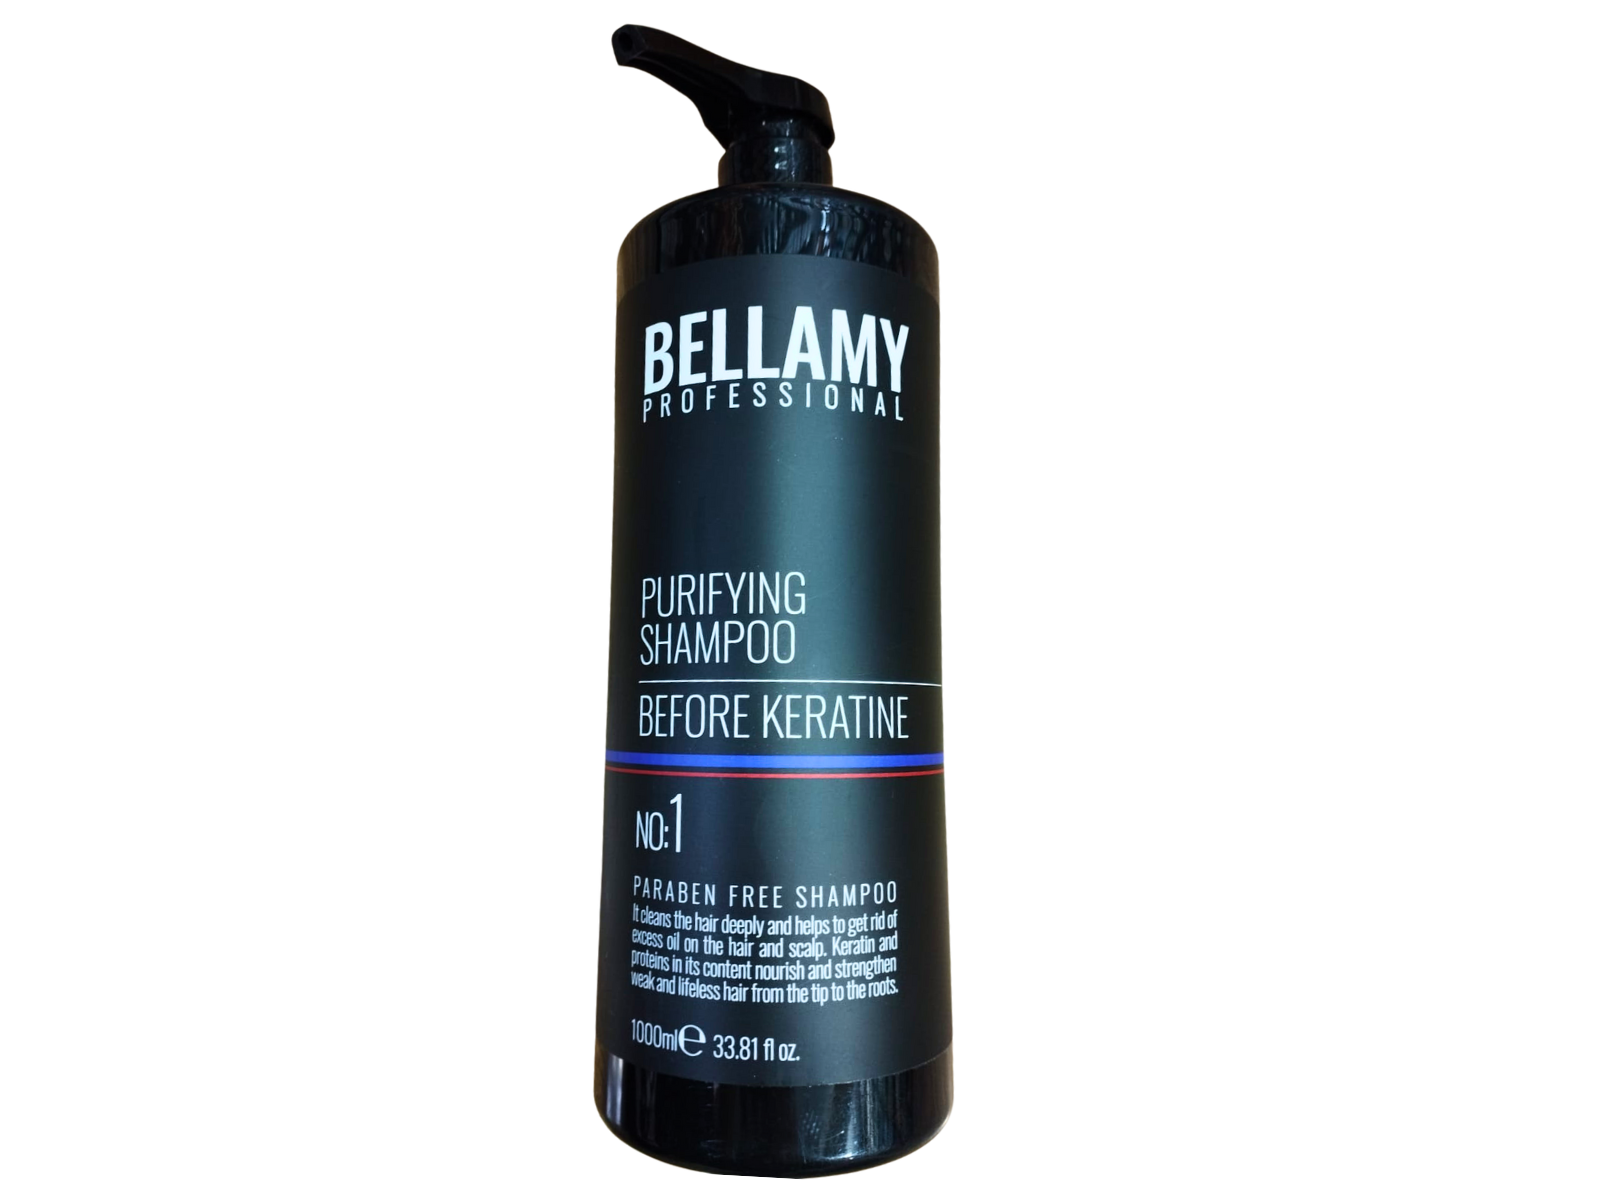 Bellamy Purifying Shampoo Before Keratine